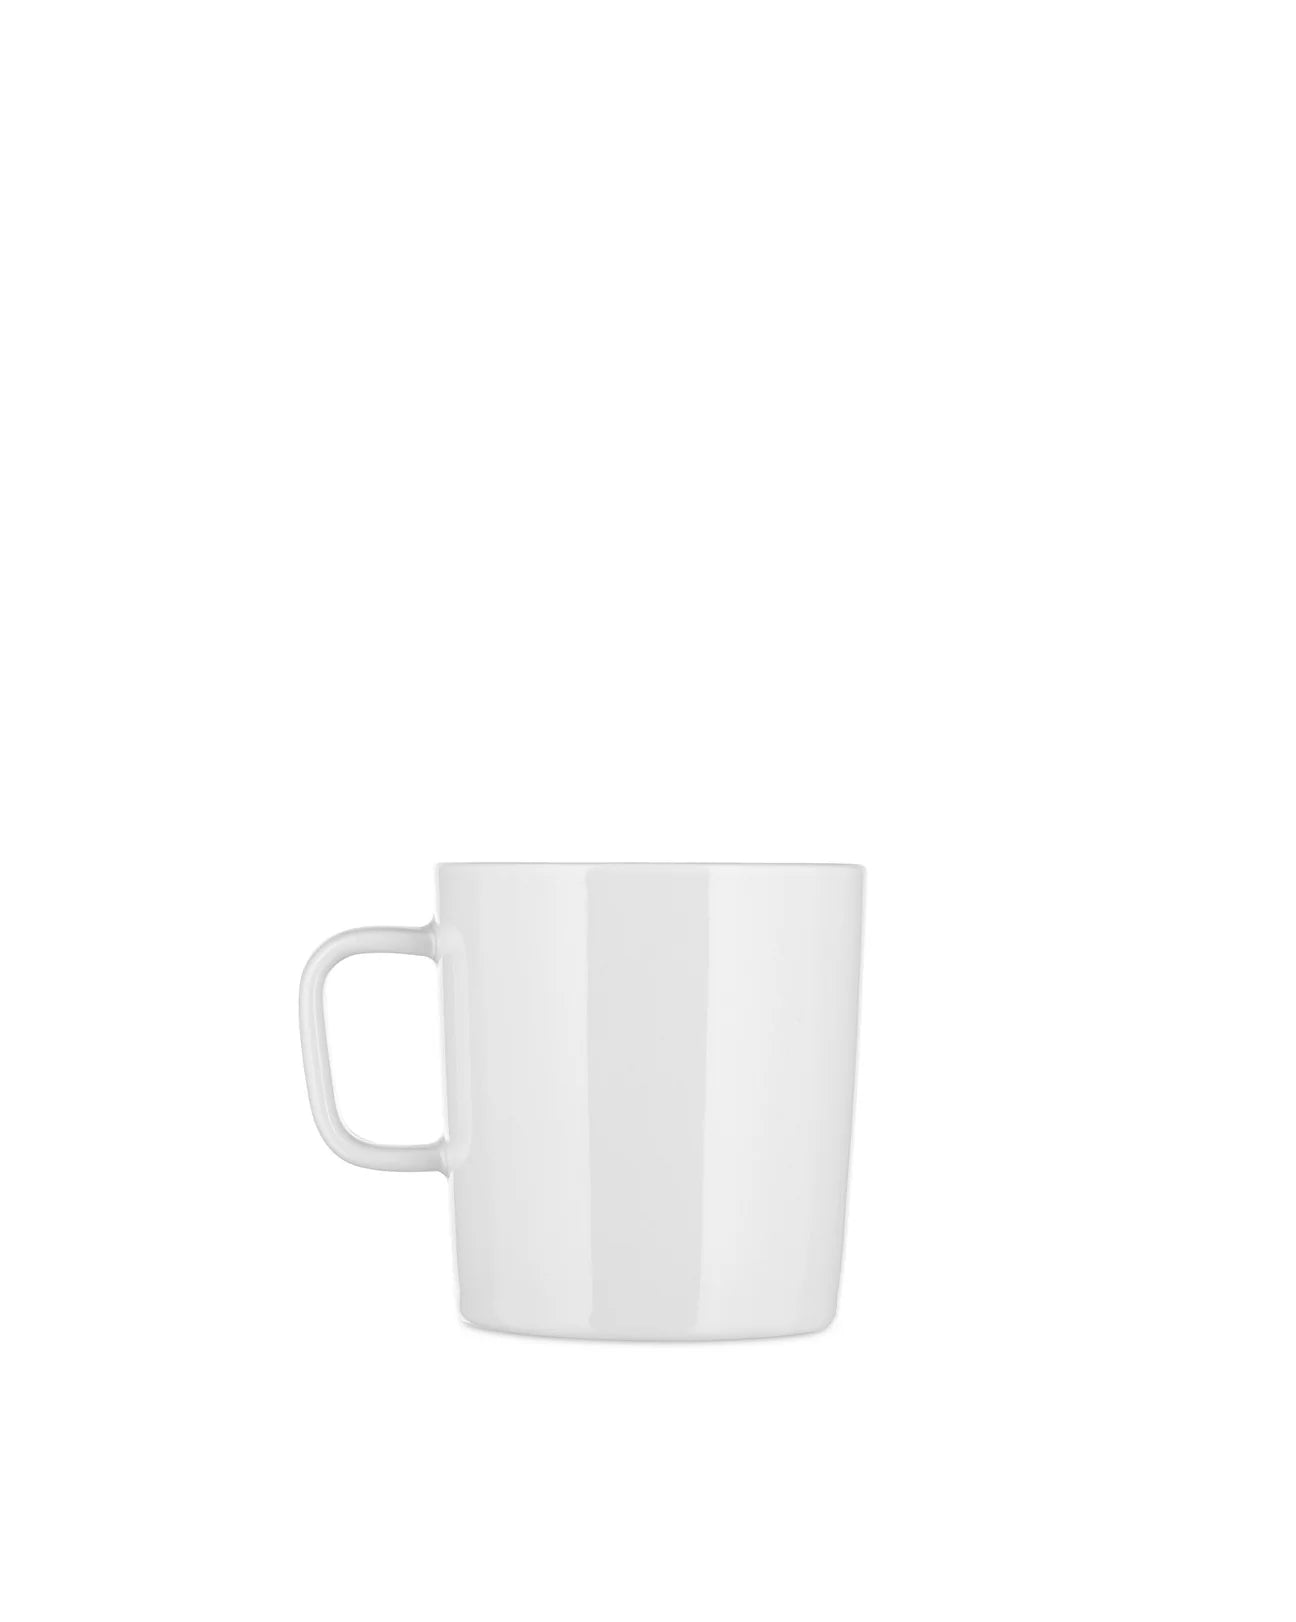 Alessi Mug Teacup White Porcelain PlateBowlCup | Panik Design